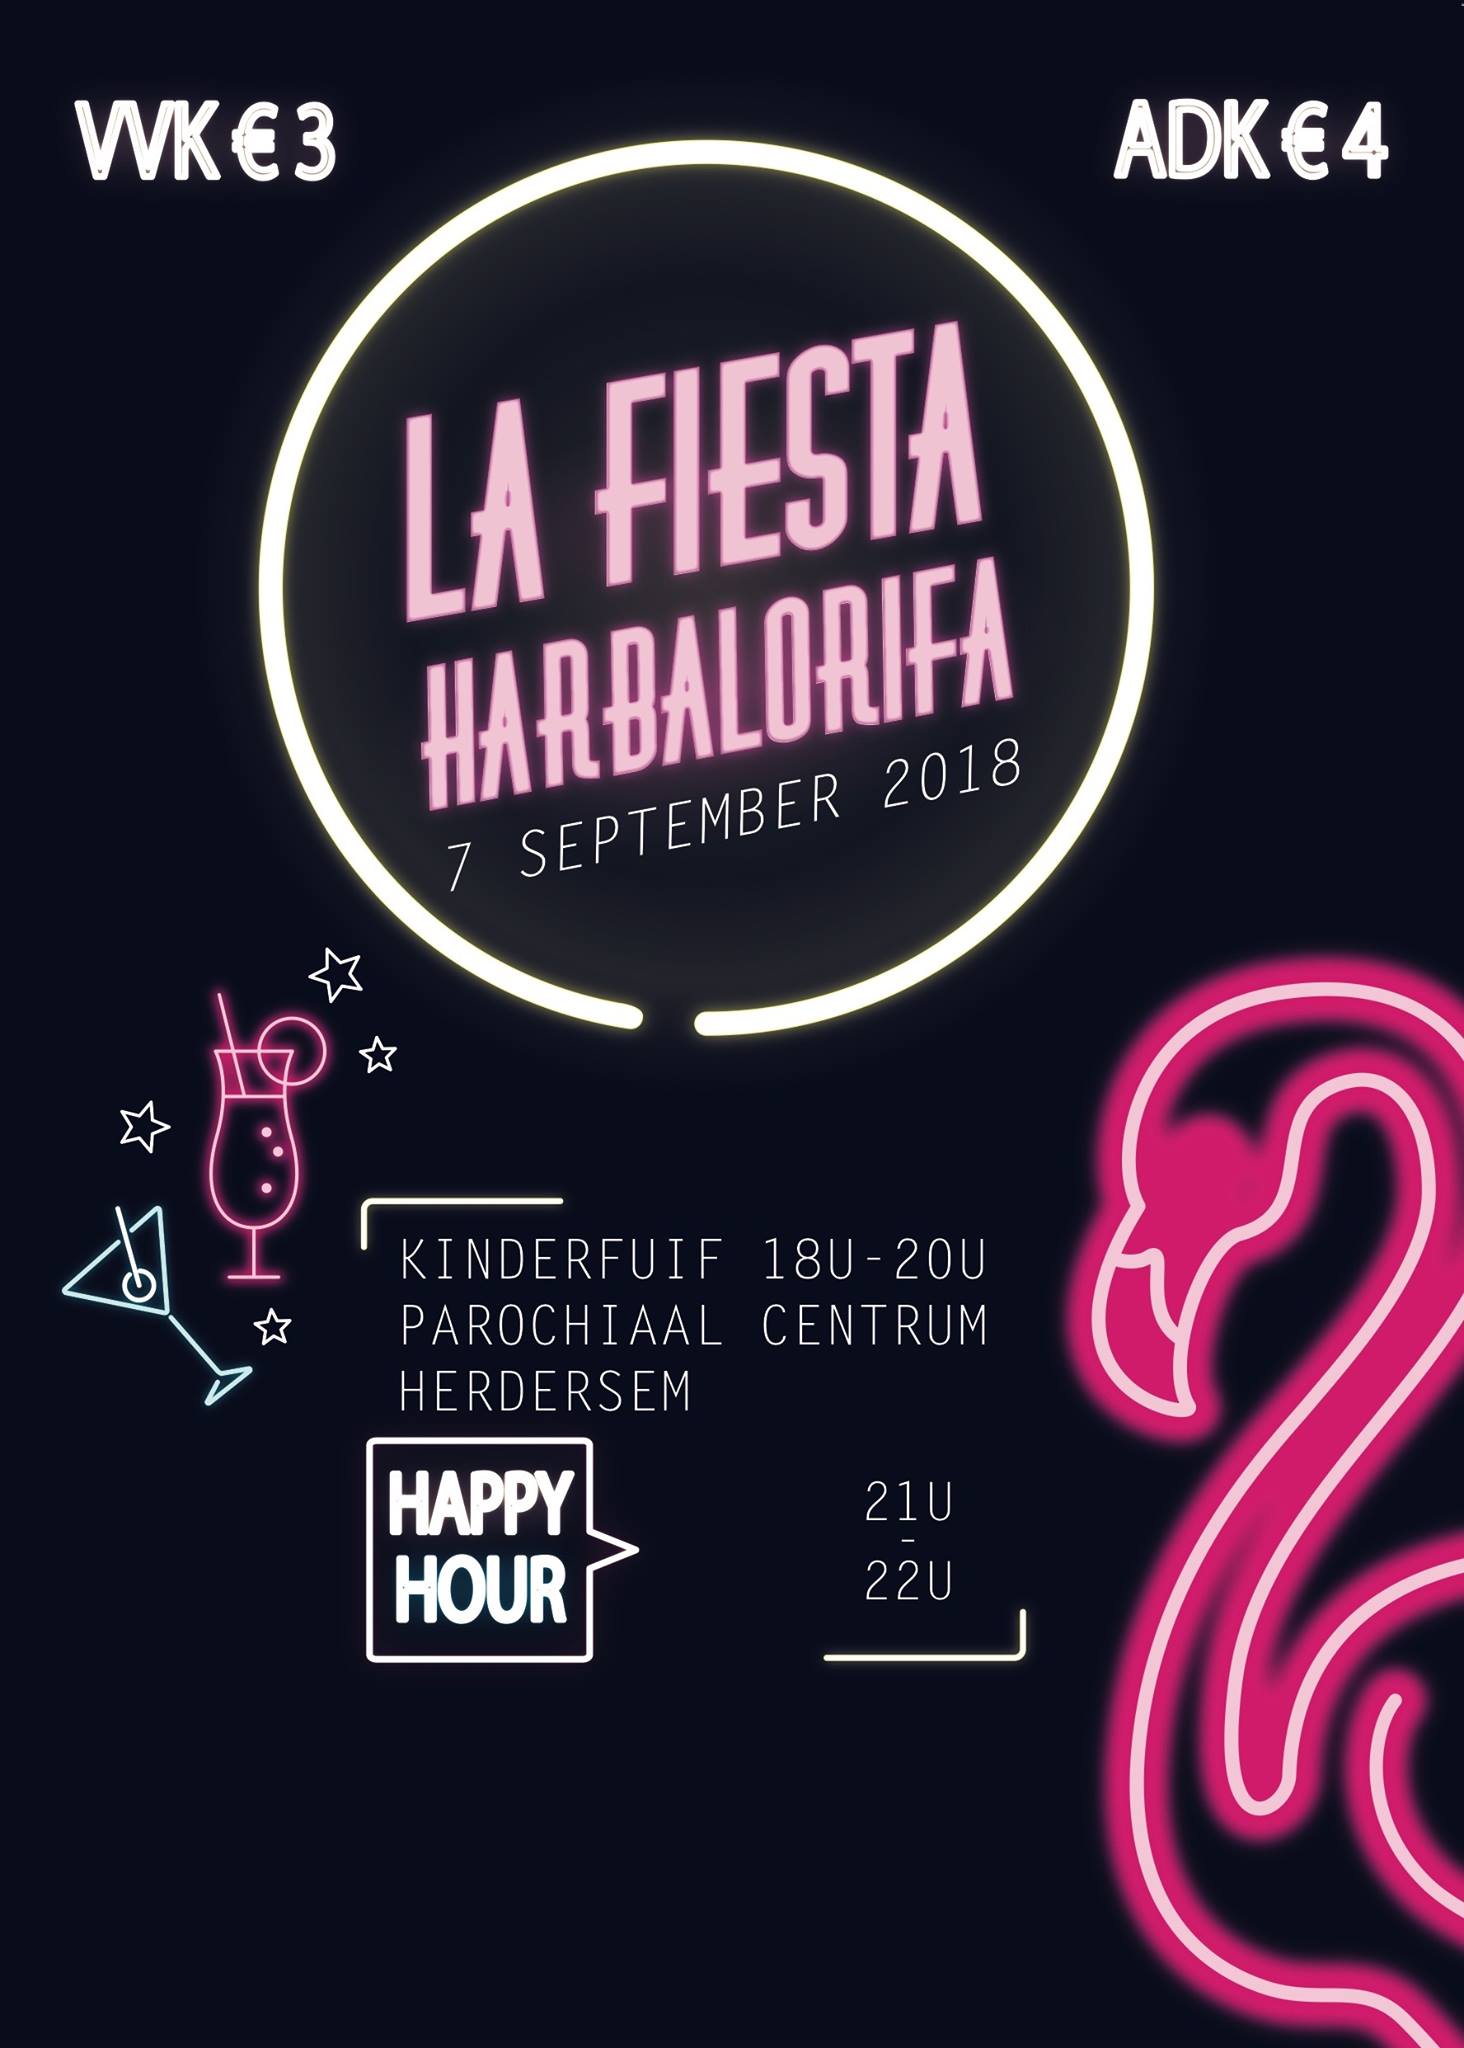 18 09 06 La Fiesta HarbaloriffaHerdersem Vrijdag 7 september 2018